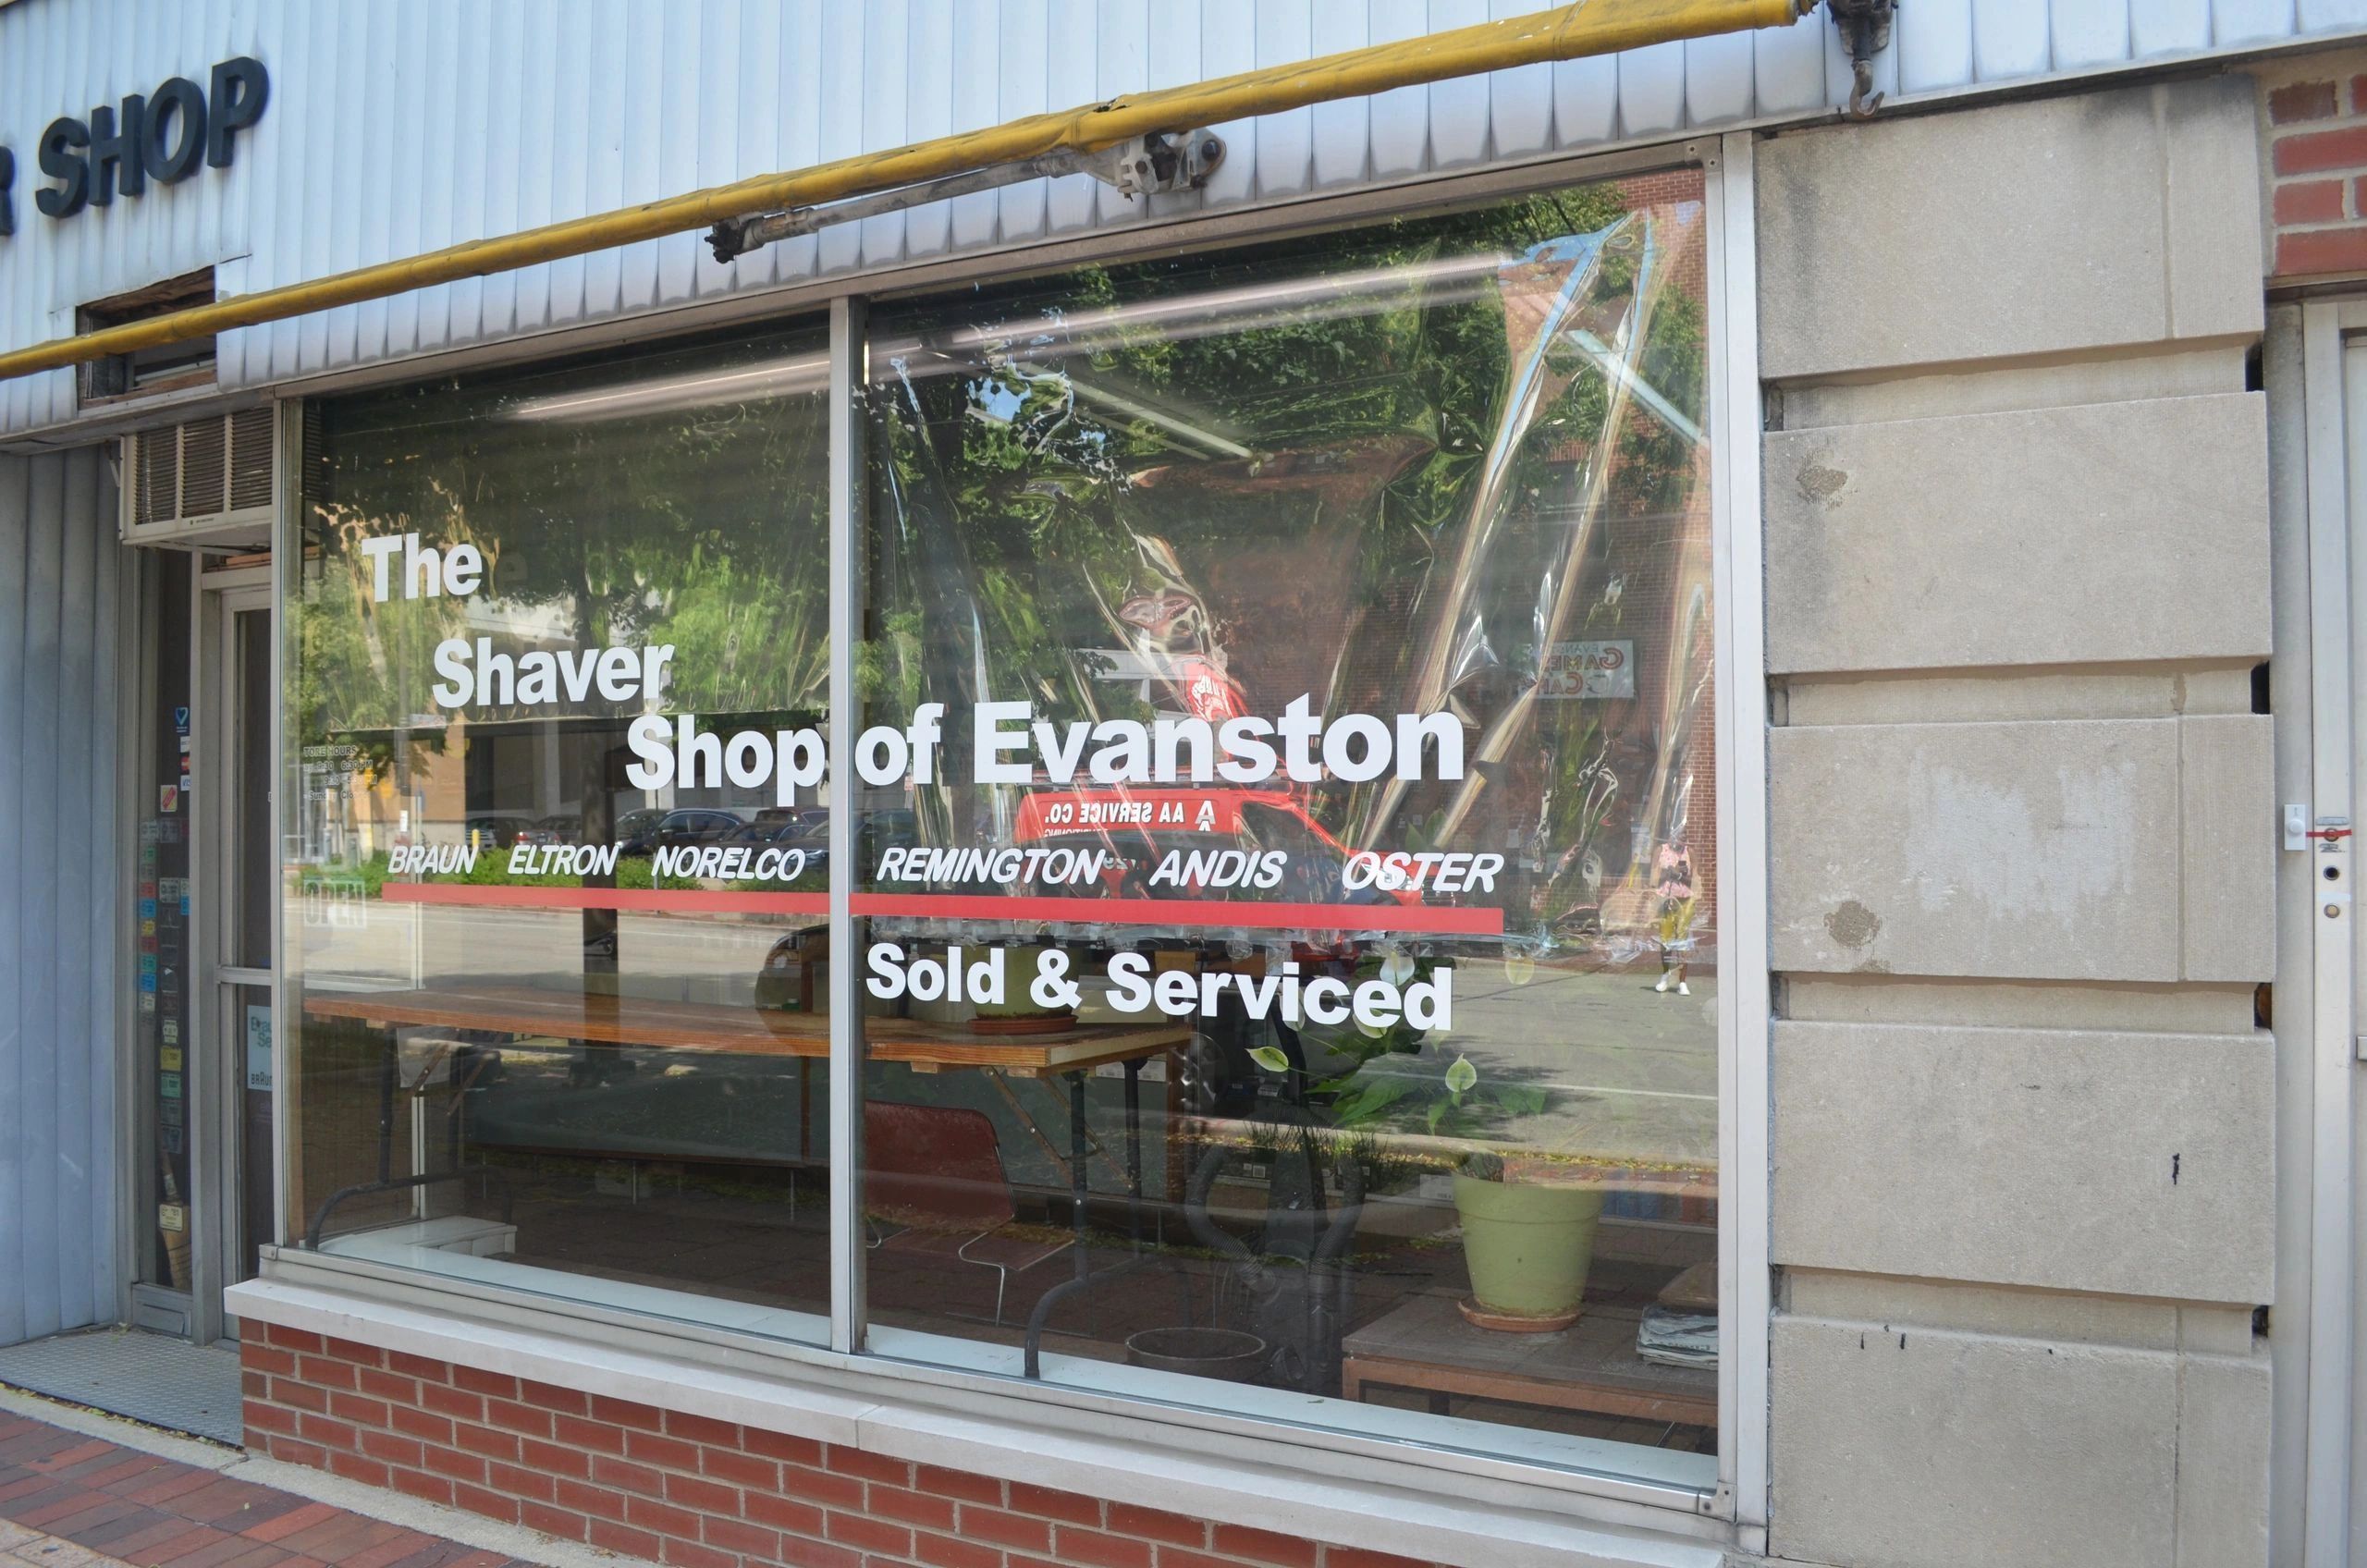 The Shaver Shop of Evanston